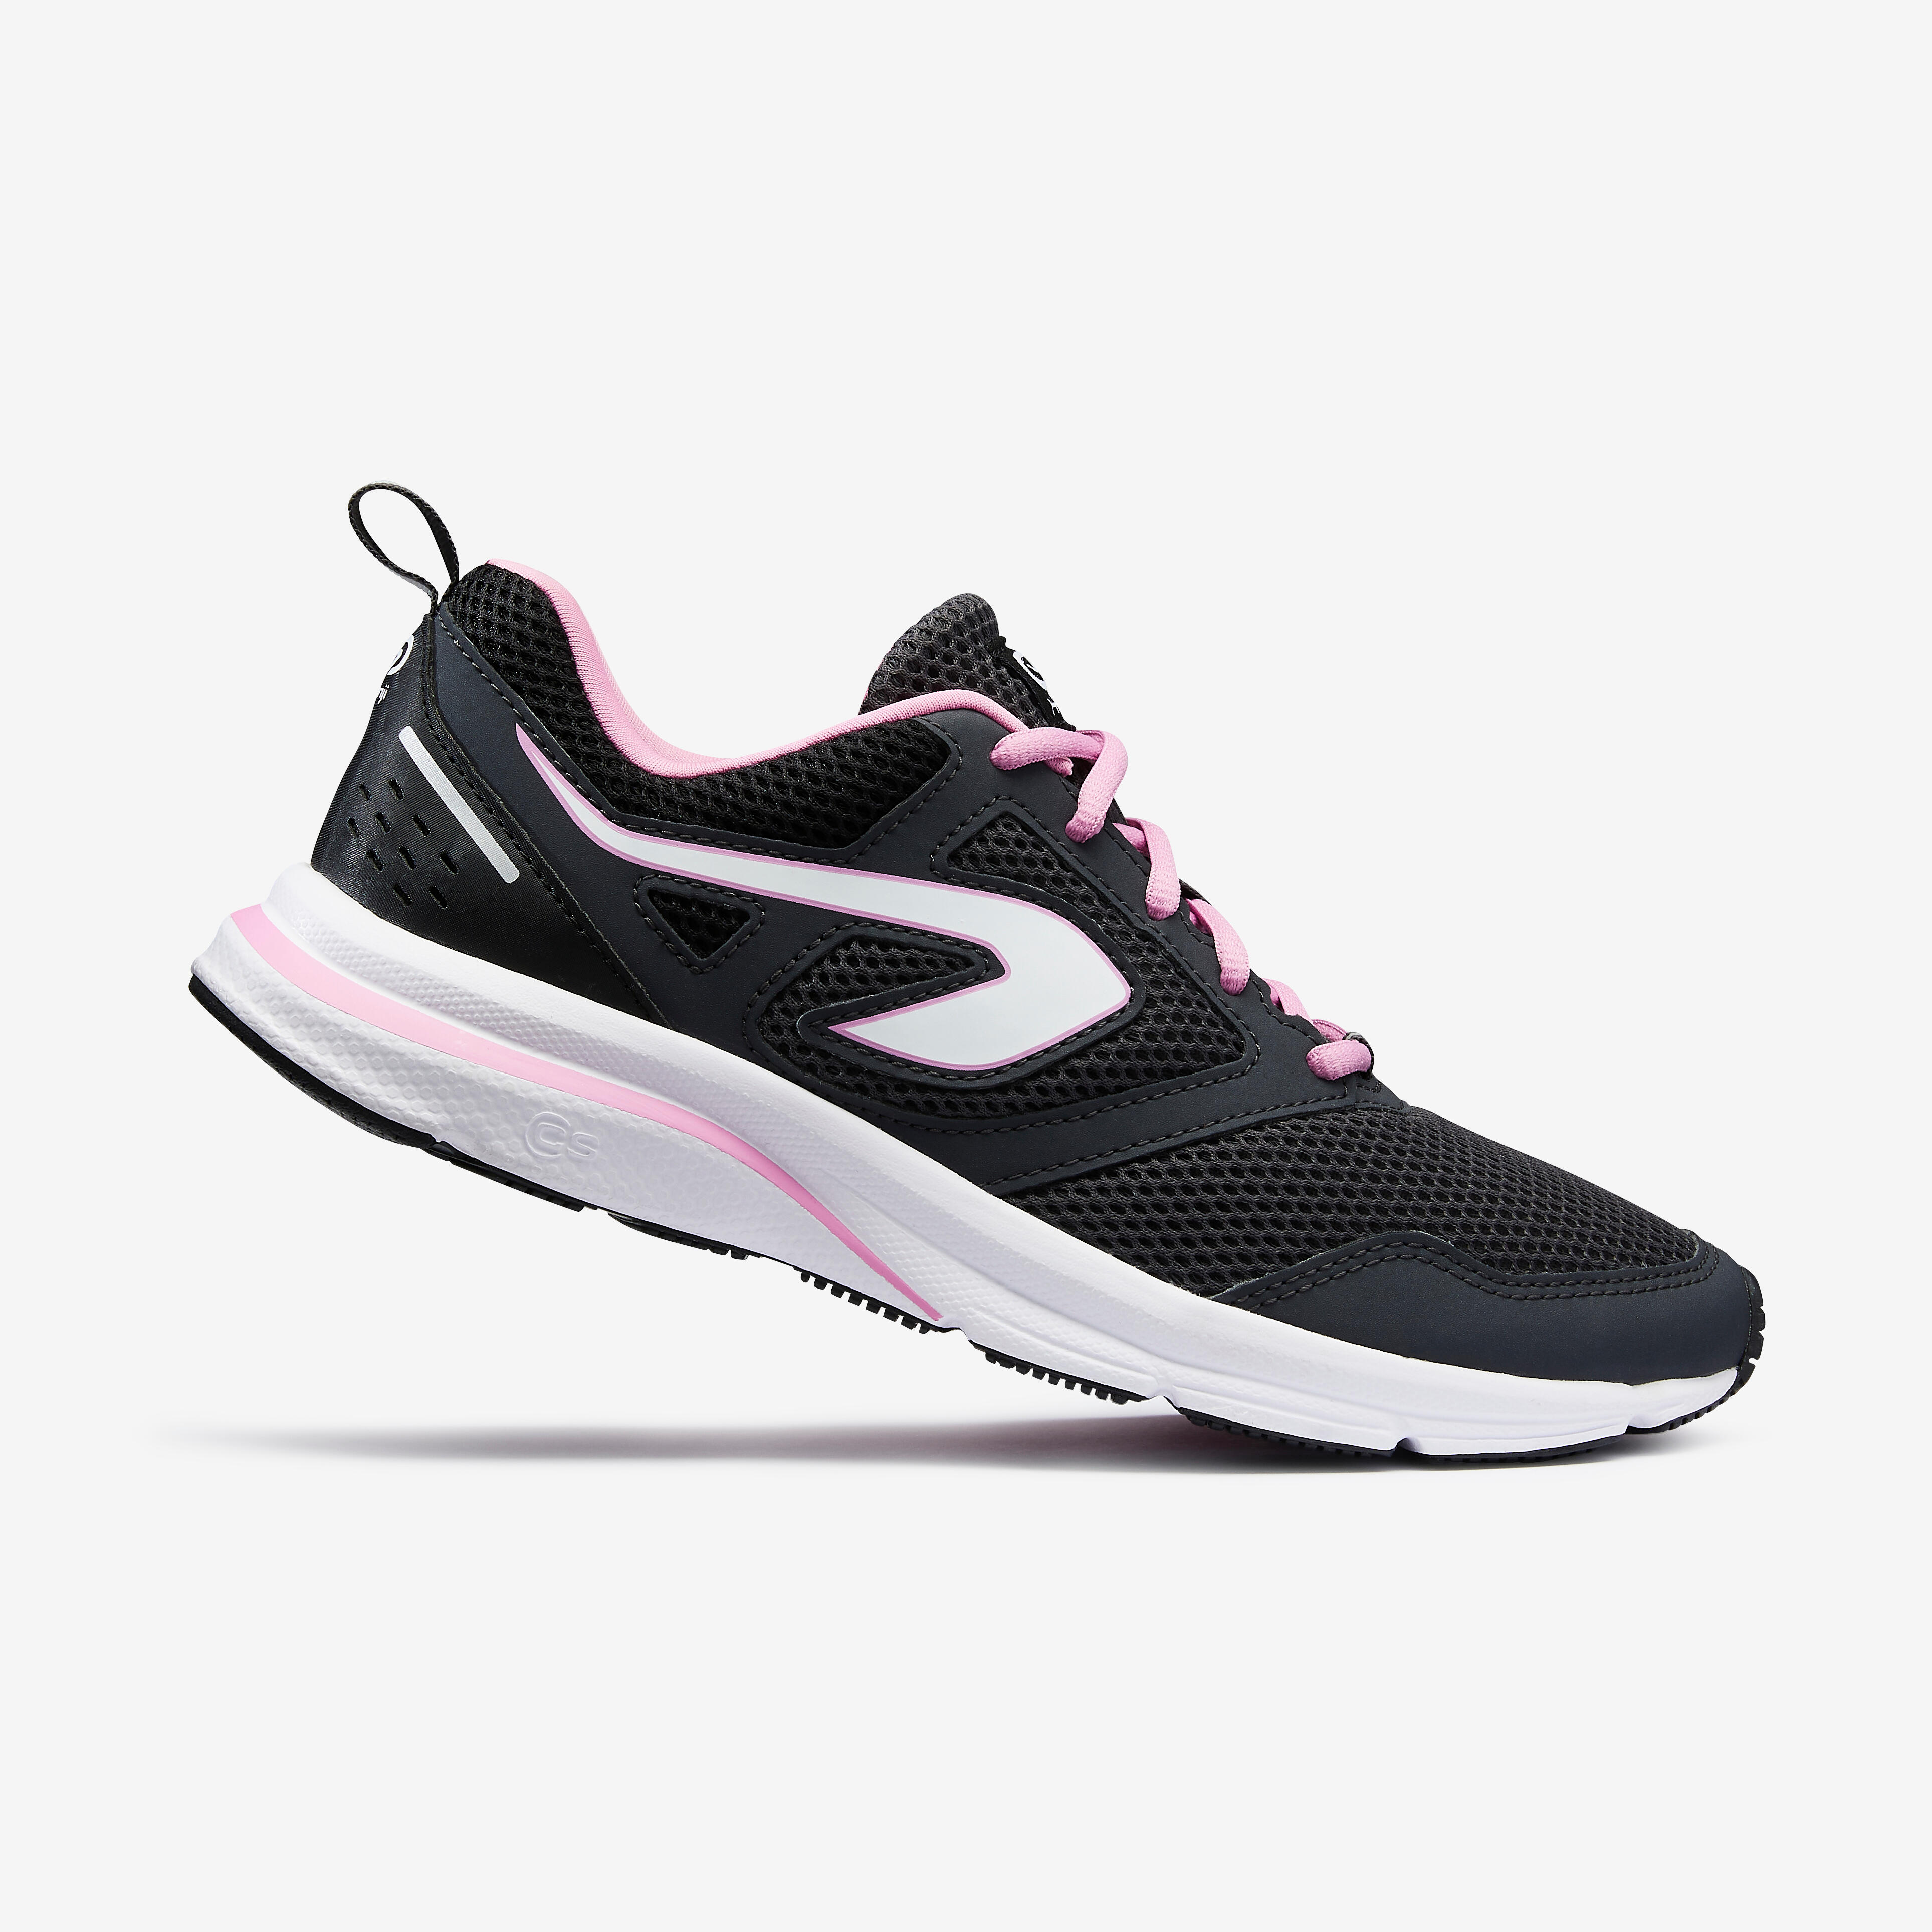 The Nike Air Zoom GT Hustle 2 Black Pink Foam Releases September 15